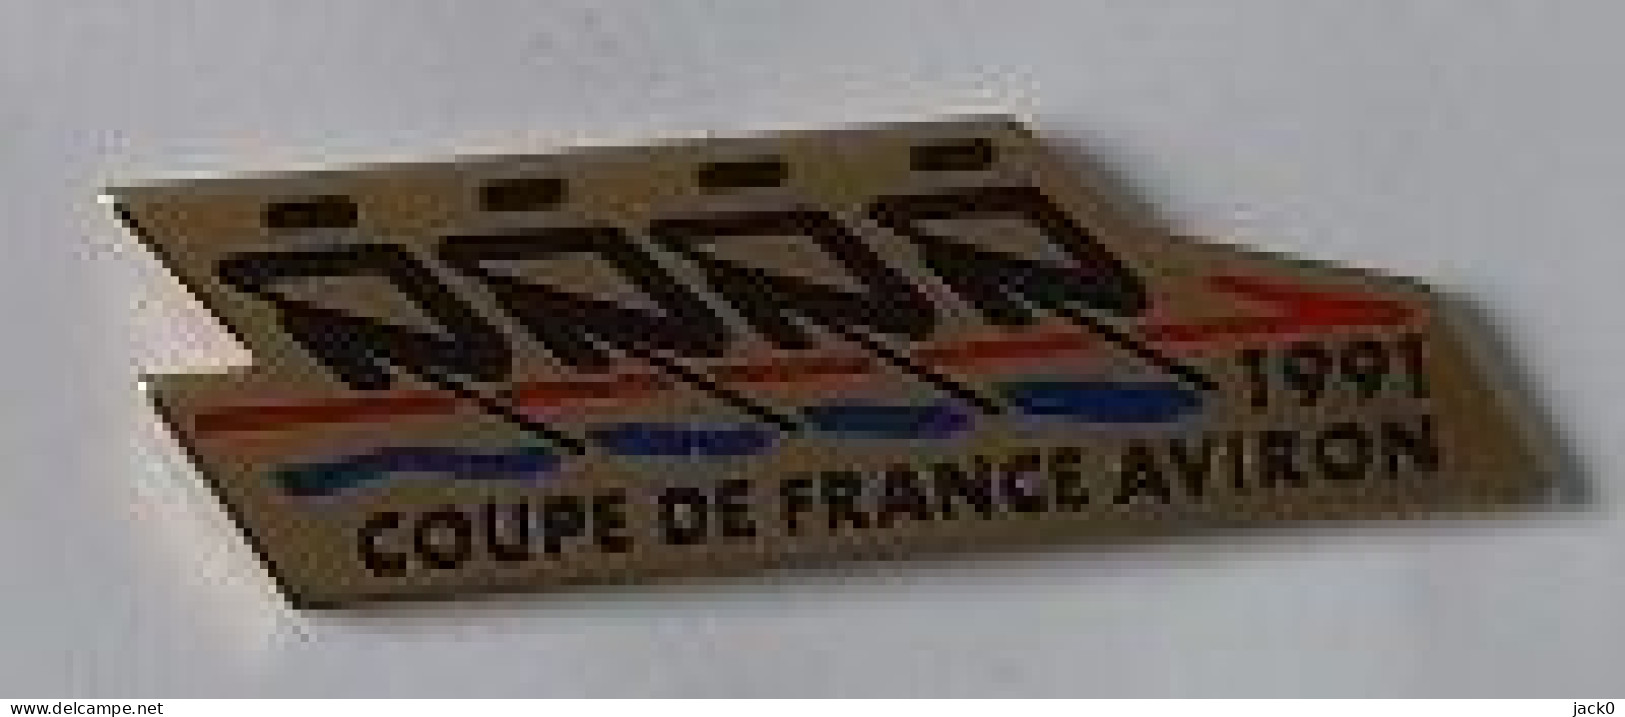 Pin' S  Sport  COUPE  DE  FRANCE  AVIRON  1991 - Remo